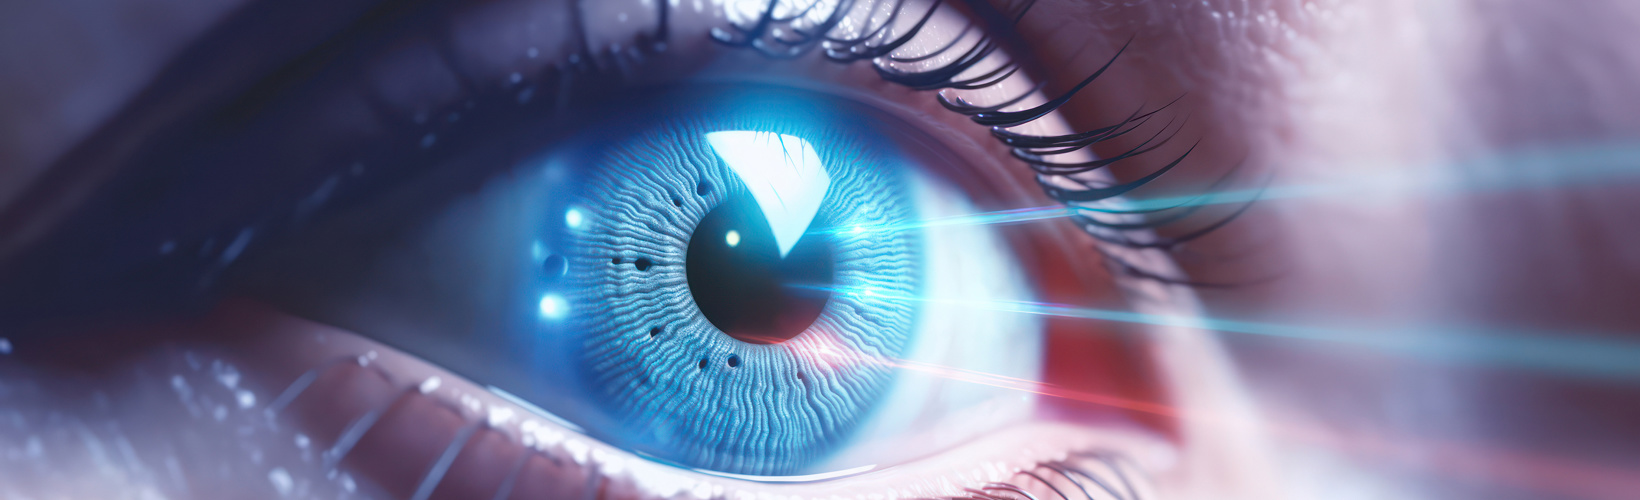 Laser Refractive Surgery for High Myopia